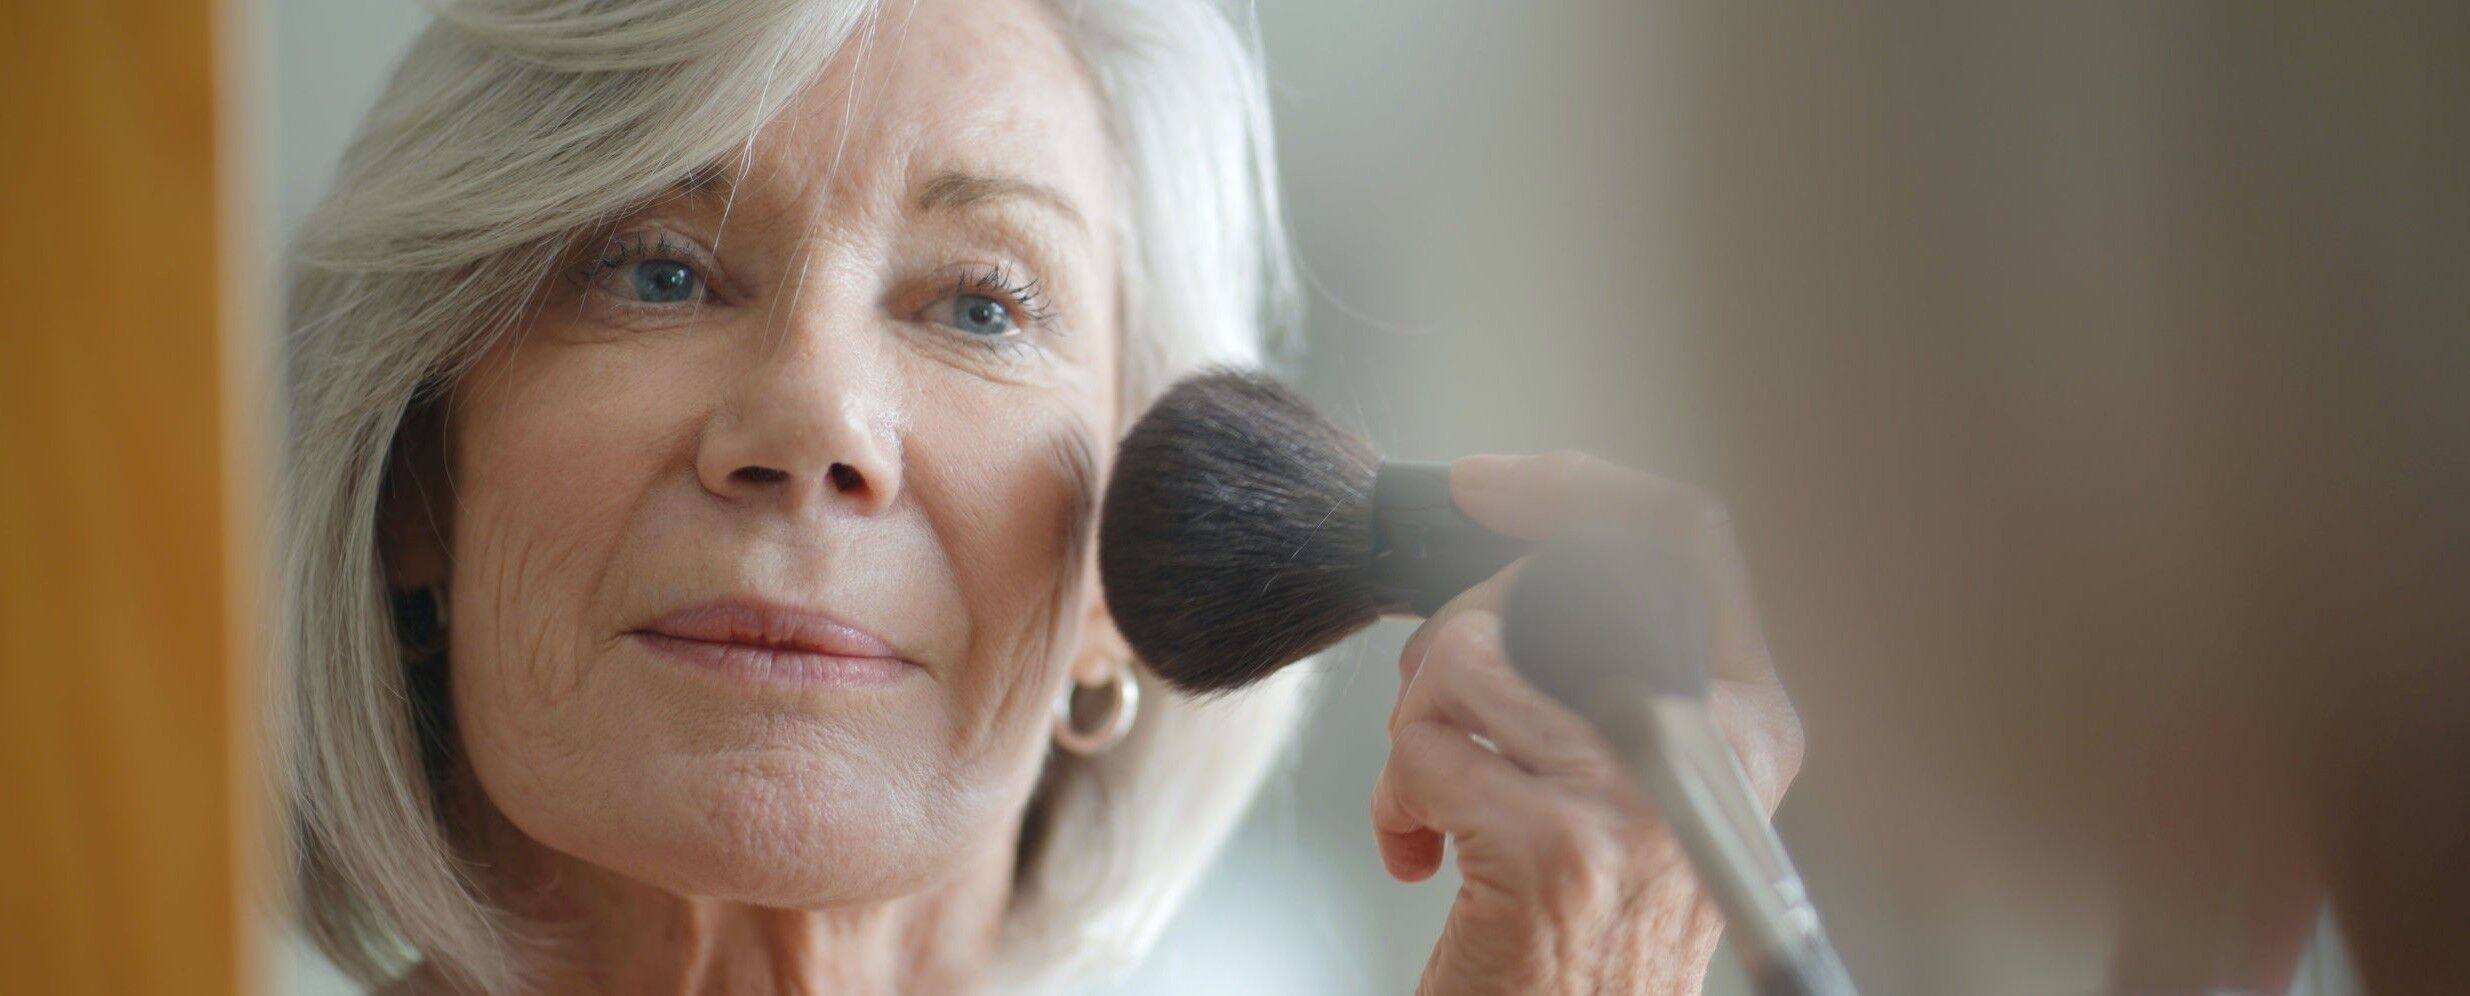 bespotten verdacht sap Top 10 make-up missers die je ouder doen lijken - Startpagina